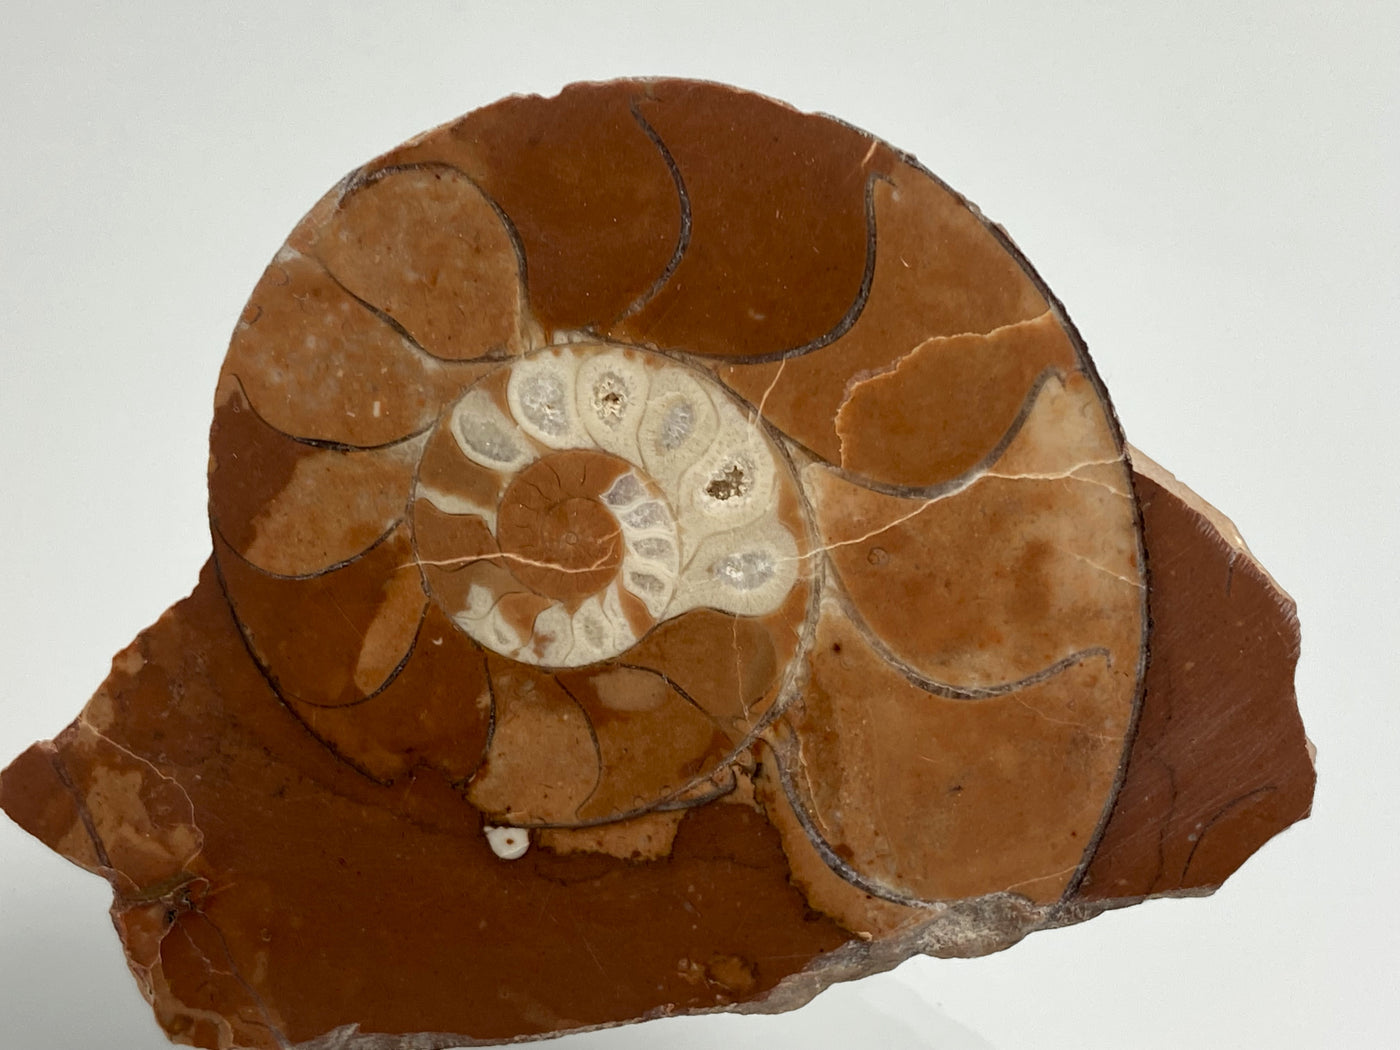 Triassic Ammonite Arcestes sp., Bad Goisern, Salzkammergut, Austria